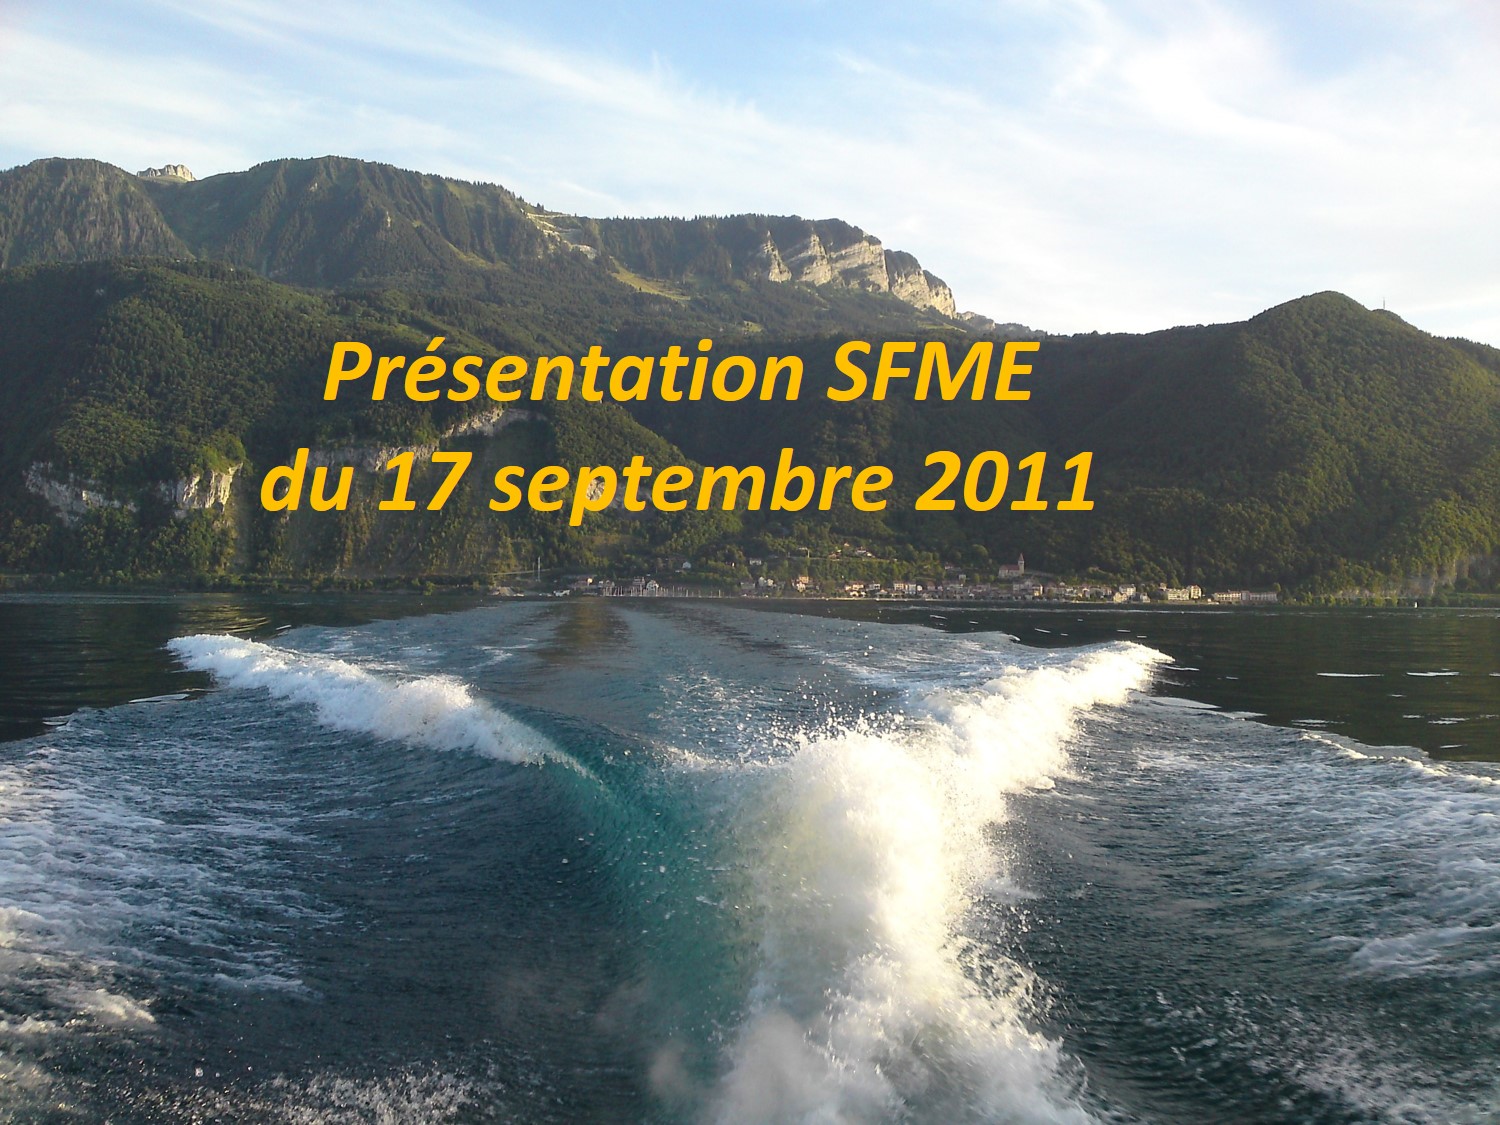 Presentation SFME